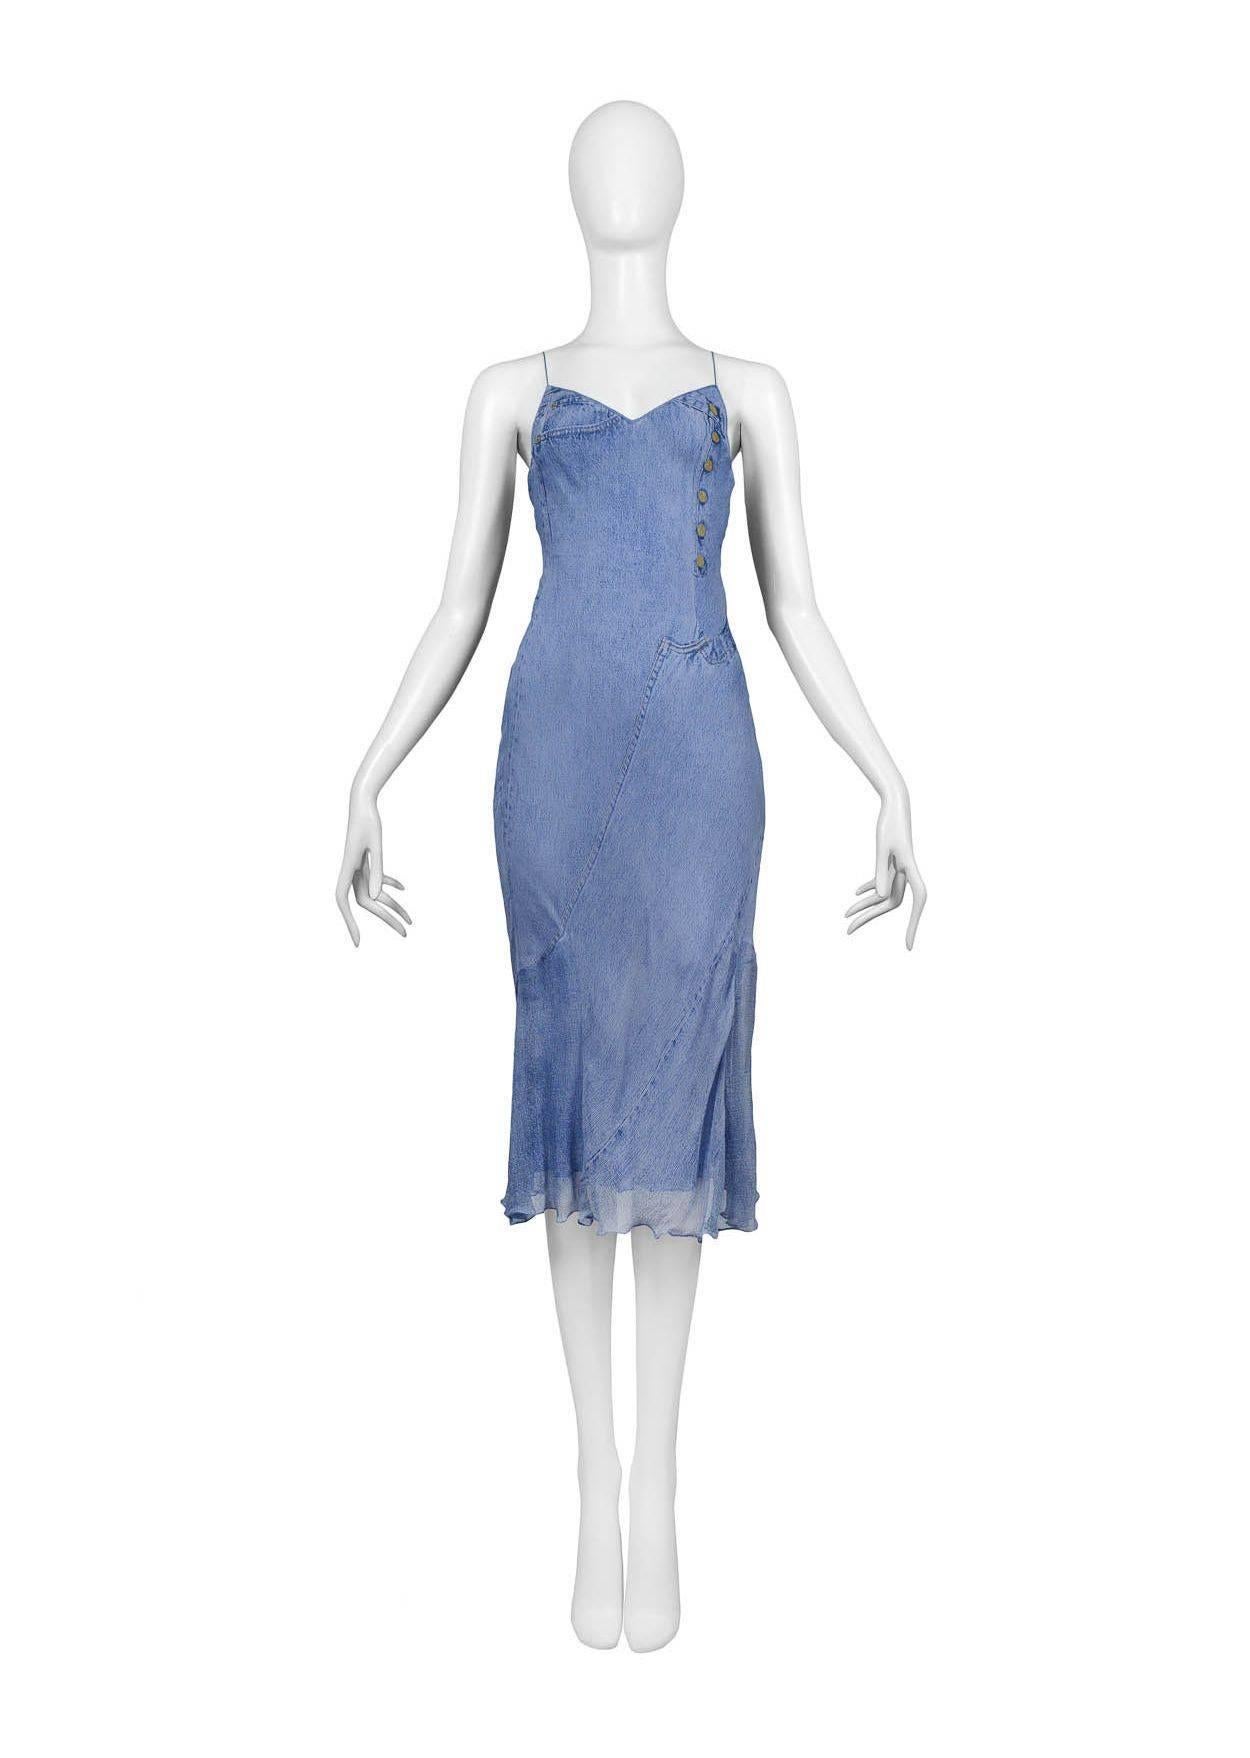 John Galliano for Christian Dior trompe l'oeil denim silk slip dress. Collection 2000.